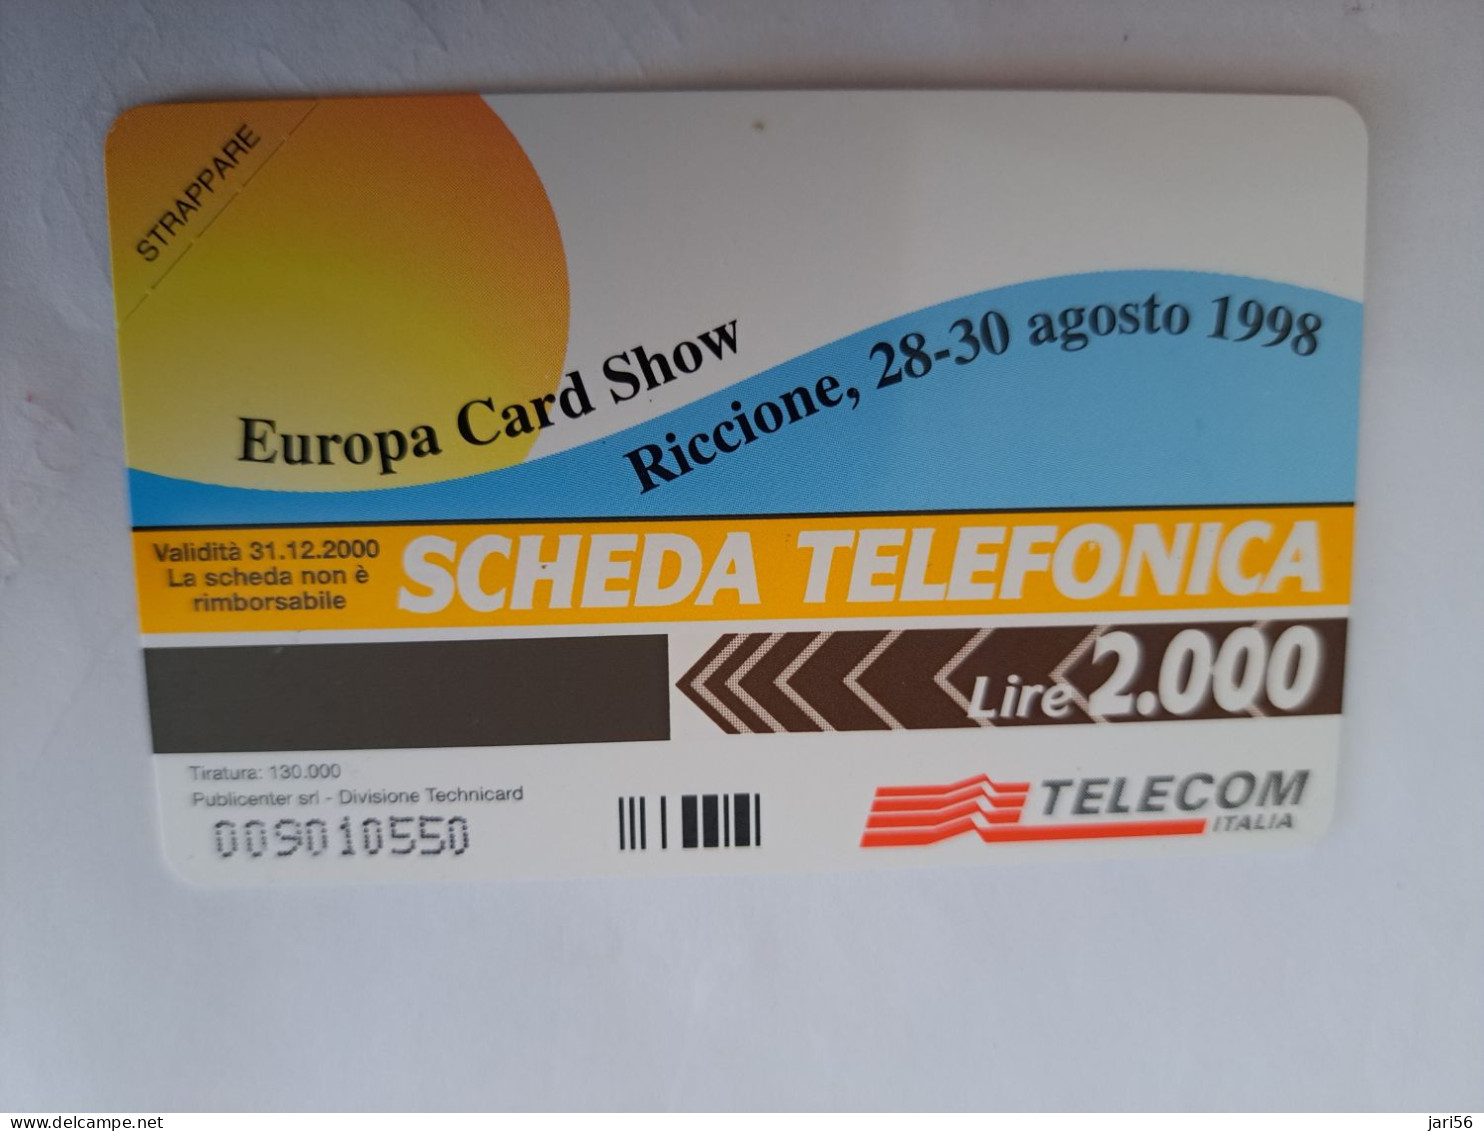 ITALIA LIRE 2000 / EUROPA CARD SHOW/ RICCIONE 1998    / PREPAID  MINT  ** 14240 ** - Públicas Ordinarias